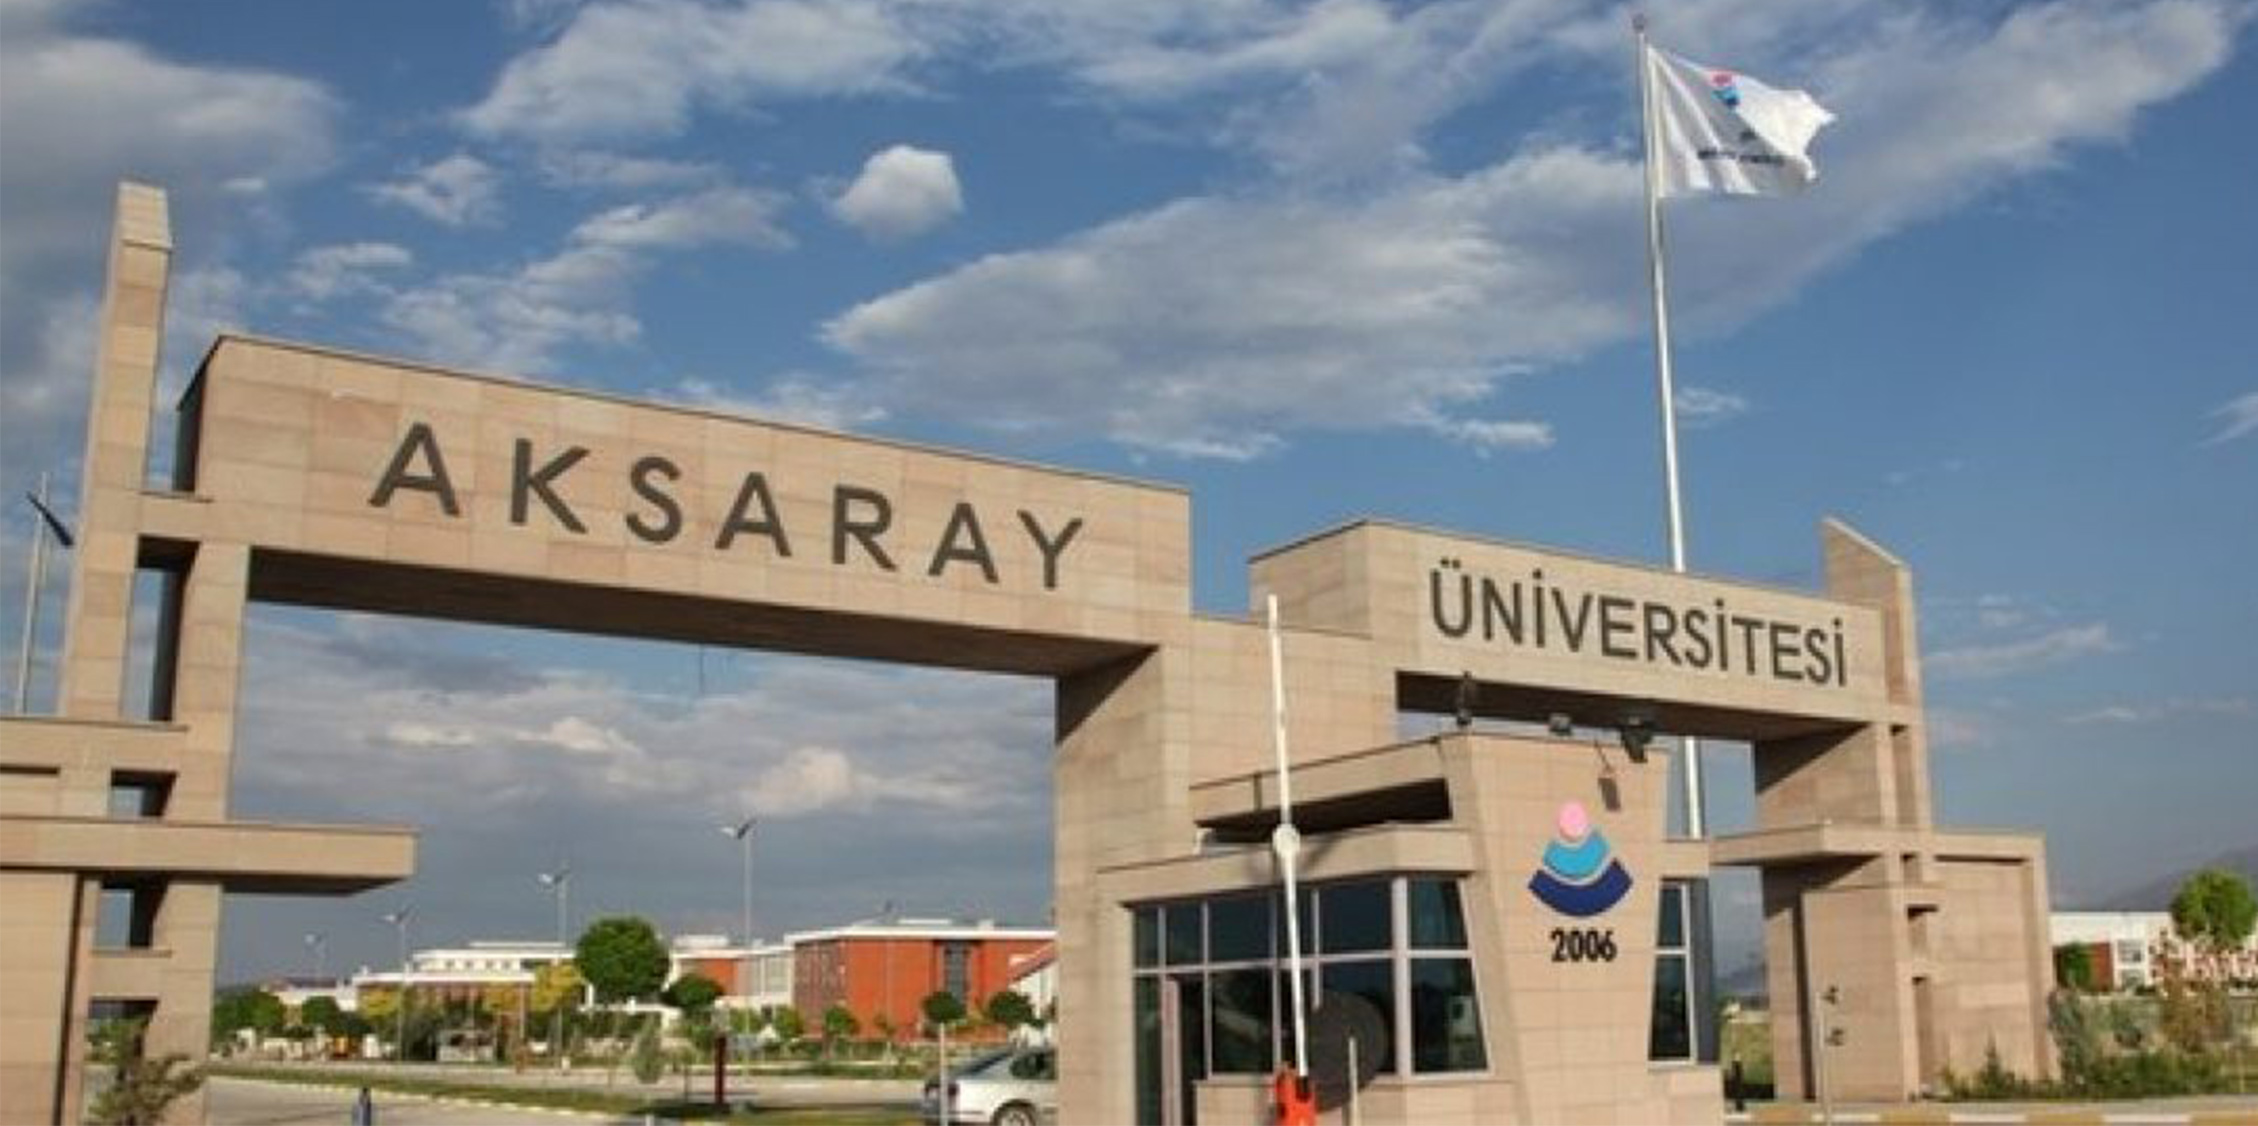 aksaray universitesi find and study 1 - Aksaray University